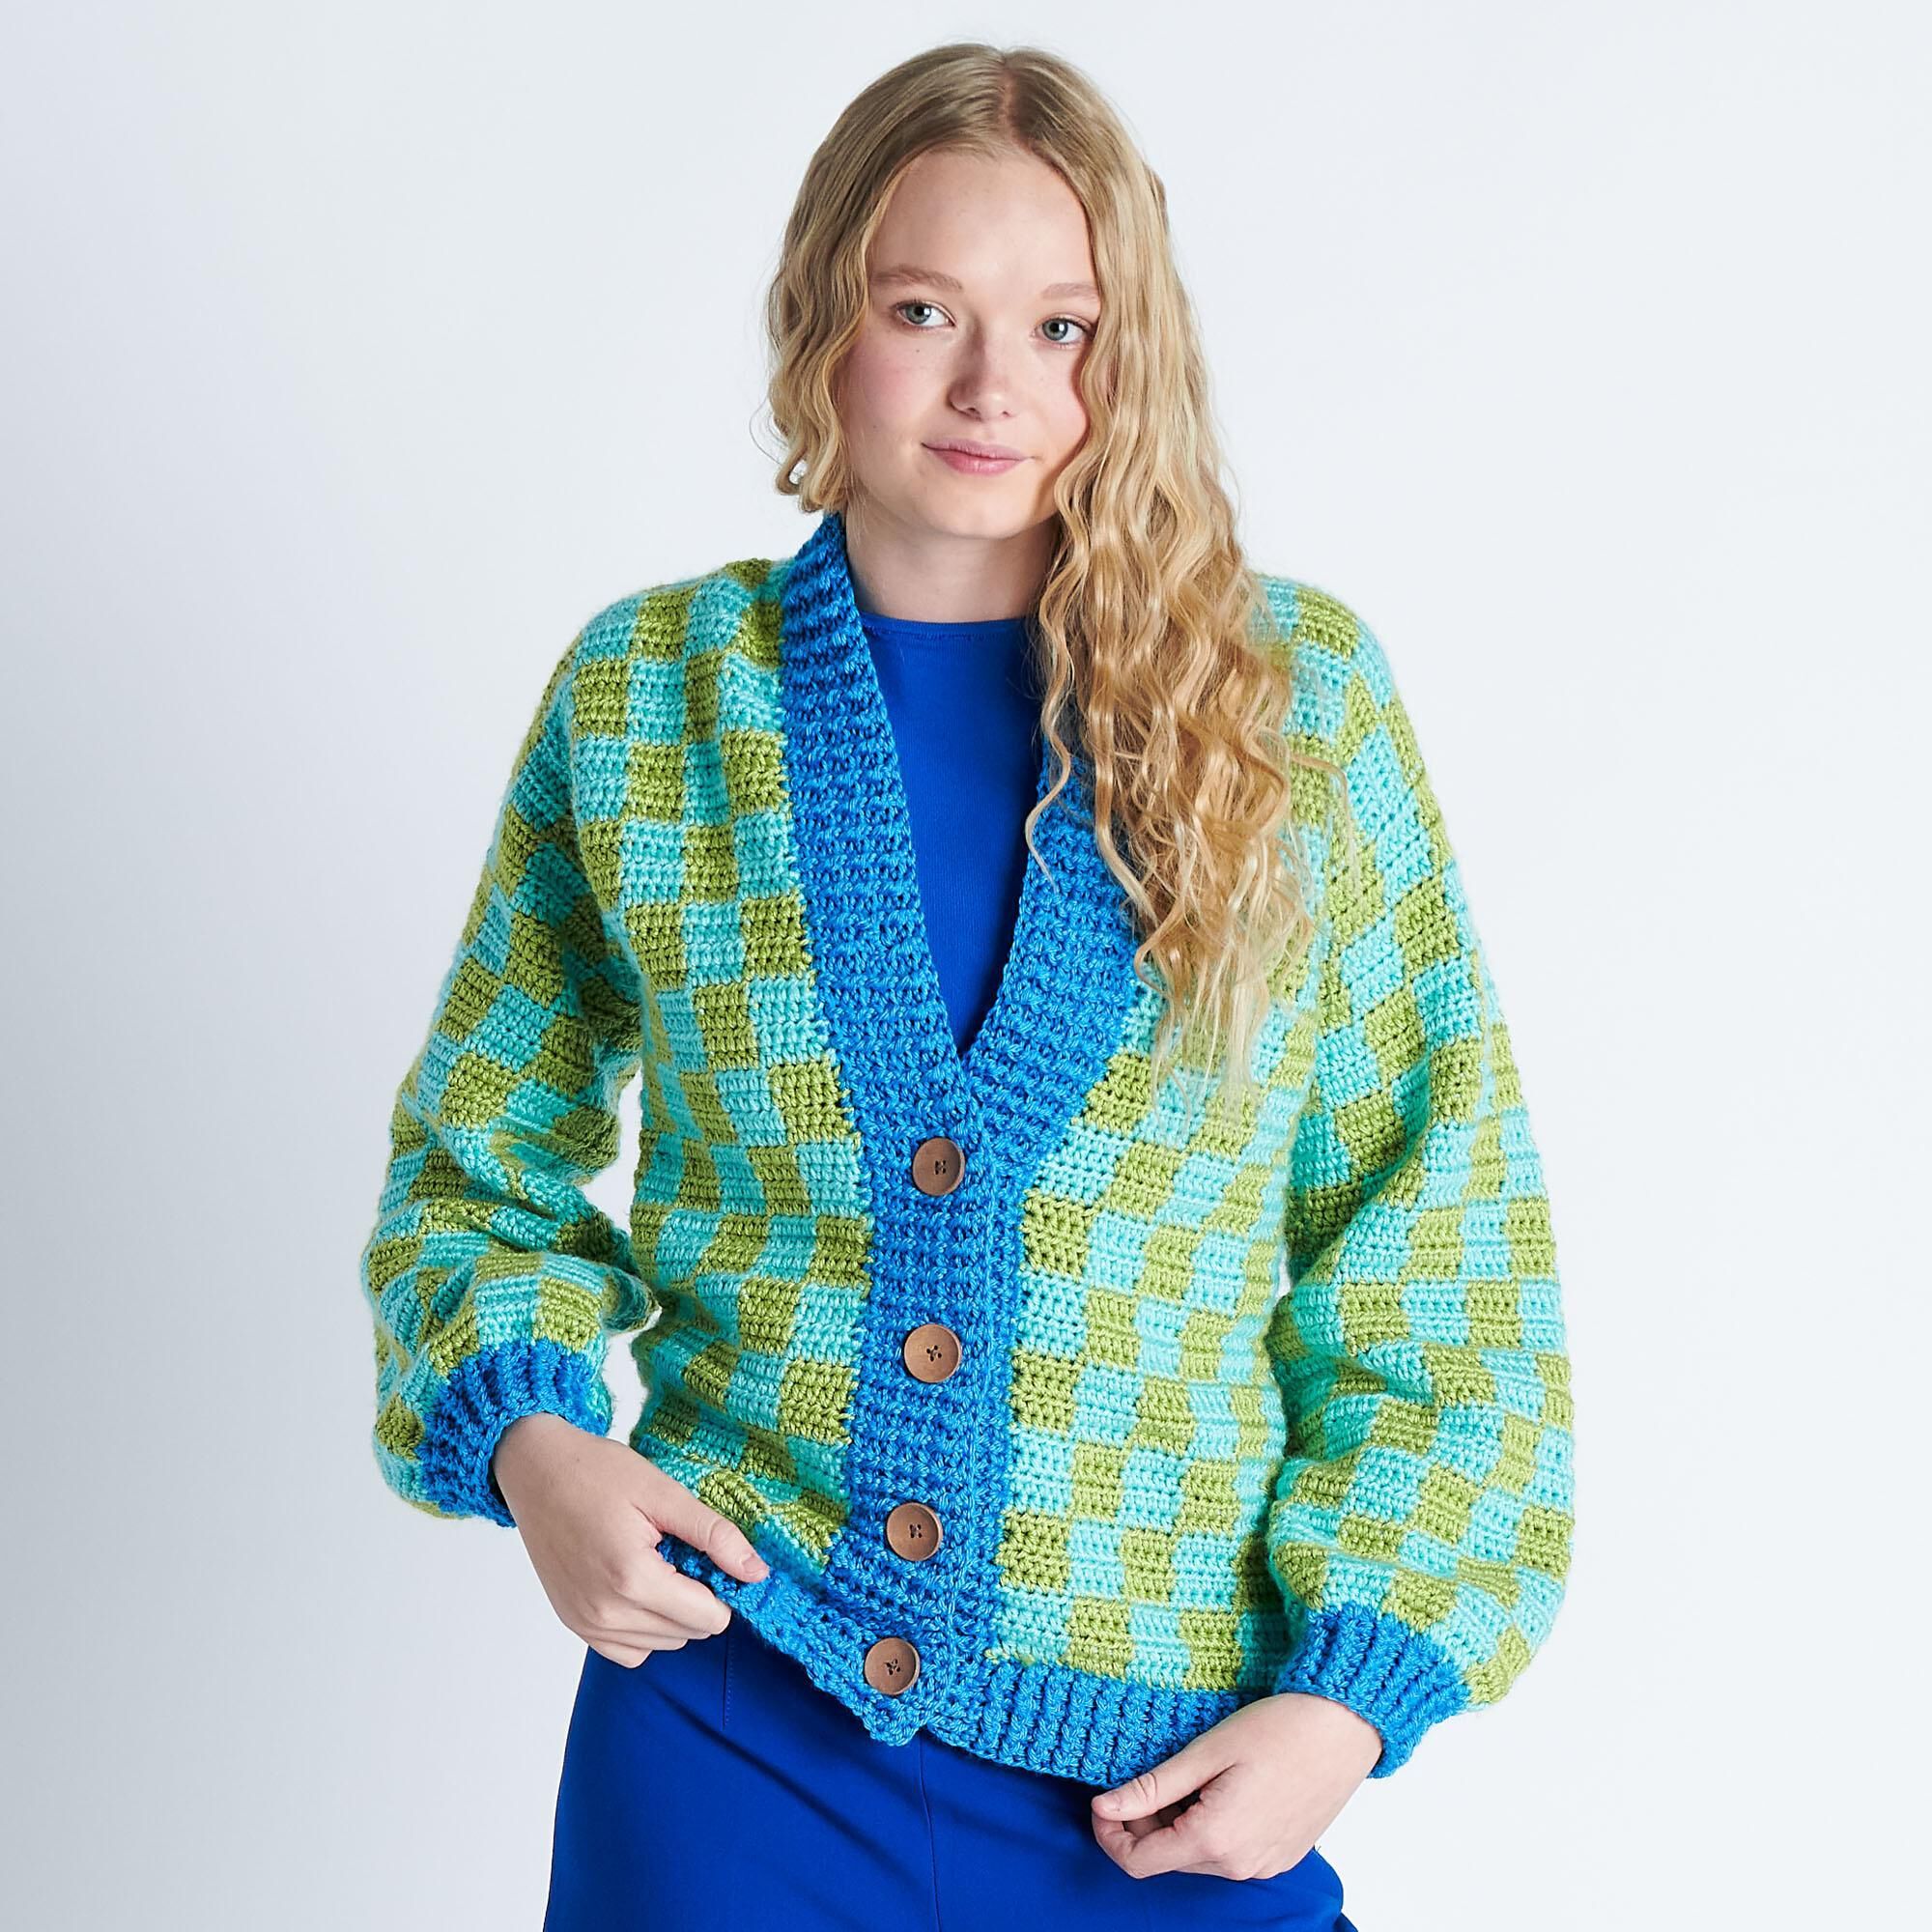 Crochet Patterns Galore - Checkered Cardigan